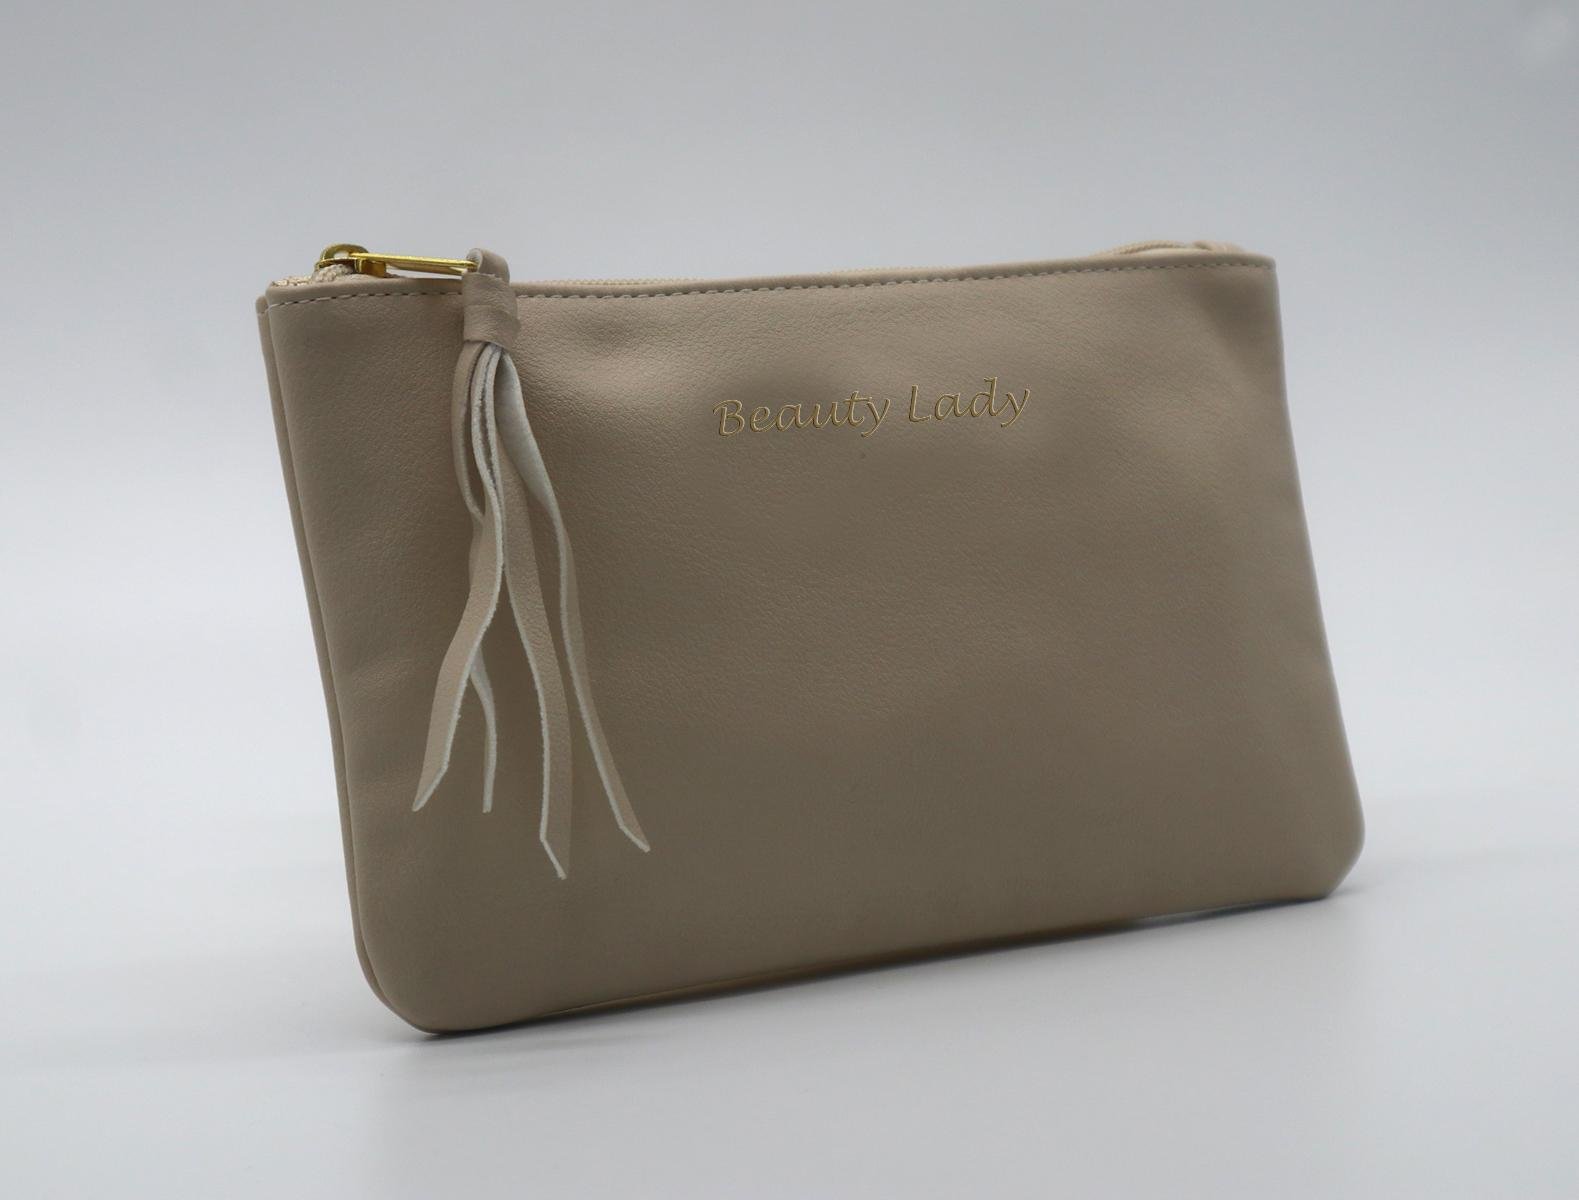 PU leather fashionable lady clutch bag with PU tassel tab 2